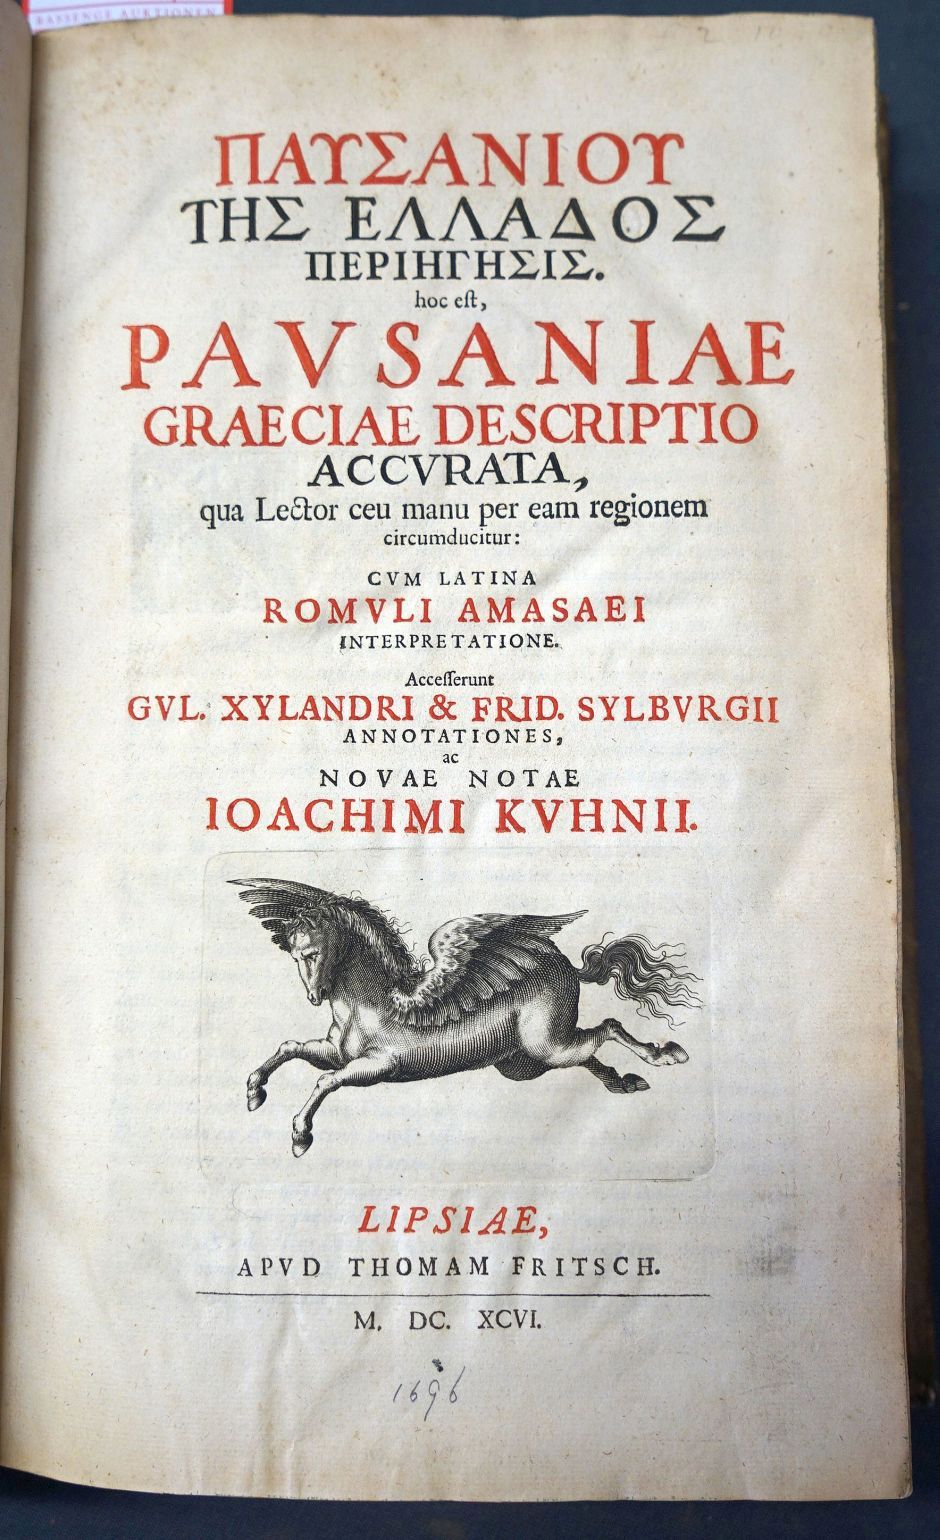 Lot 2131, Auction  115, Pausanias, Tis Ellados periigisis (graece). Graeciae descriptio 